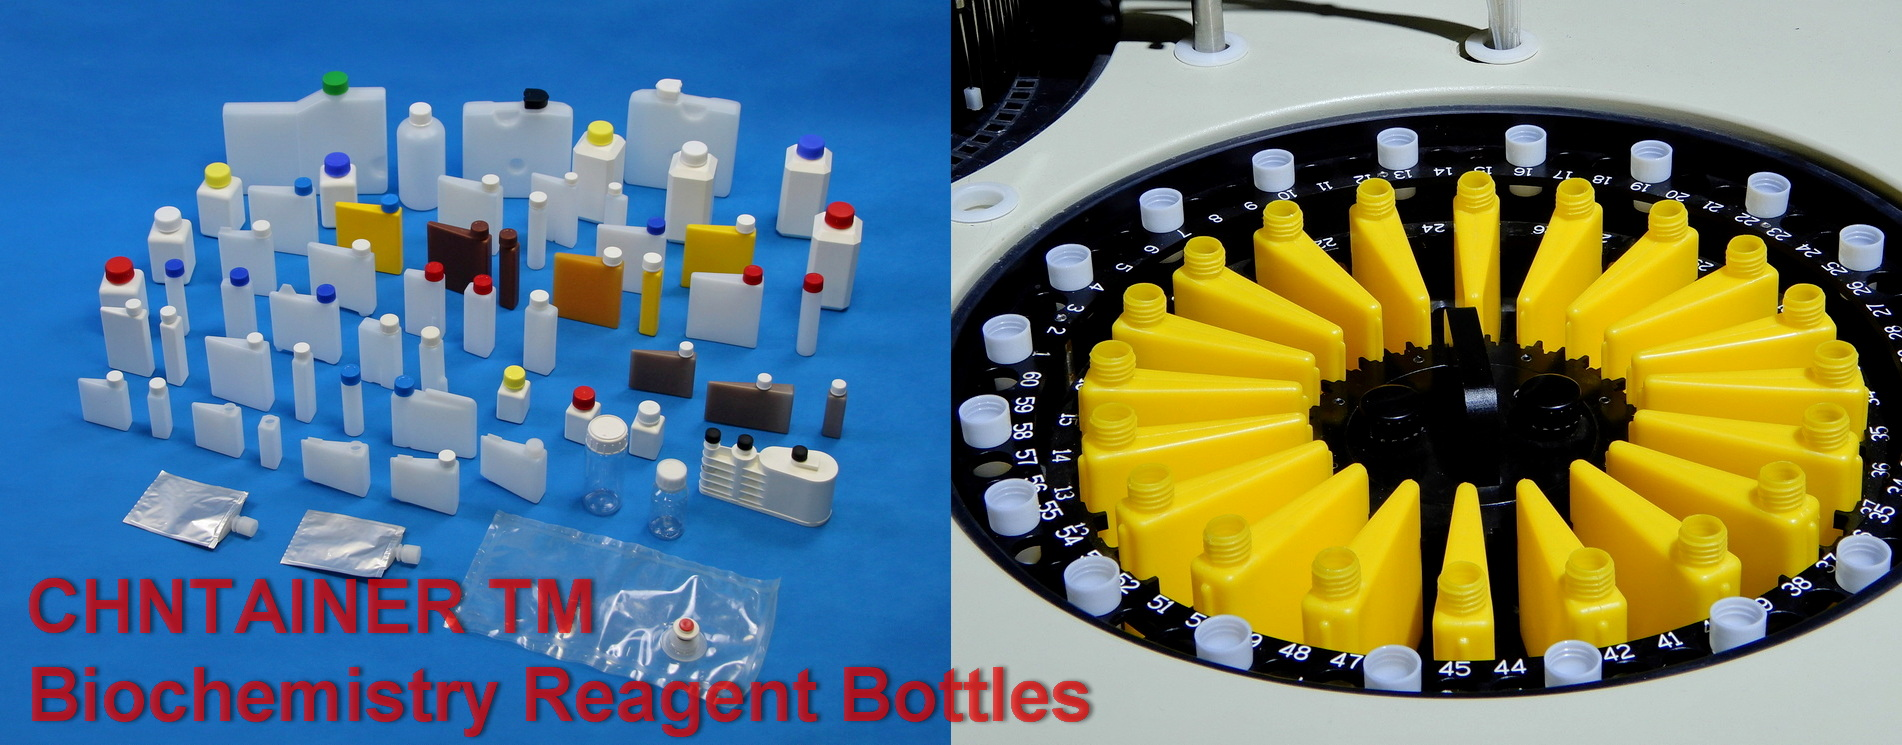 banner_IVD_Biochemistry_Reagent_Bottles_chntainer_CFDPLAS_001